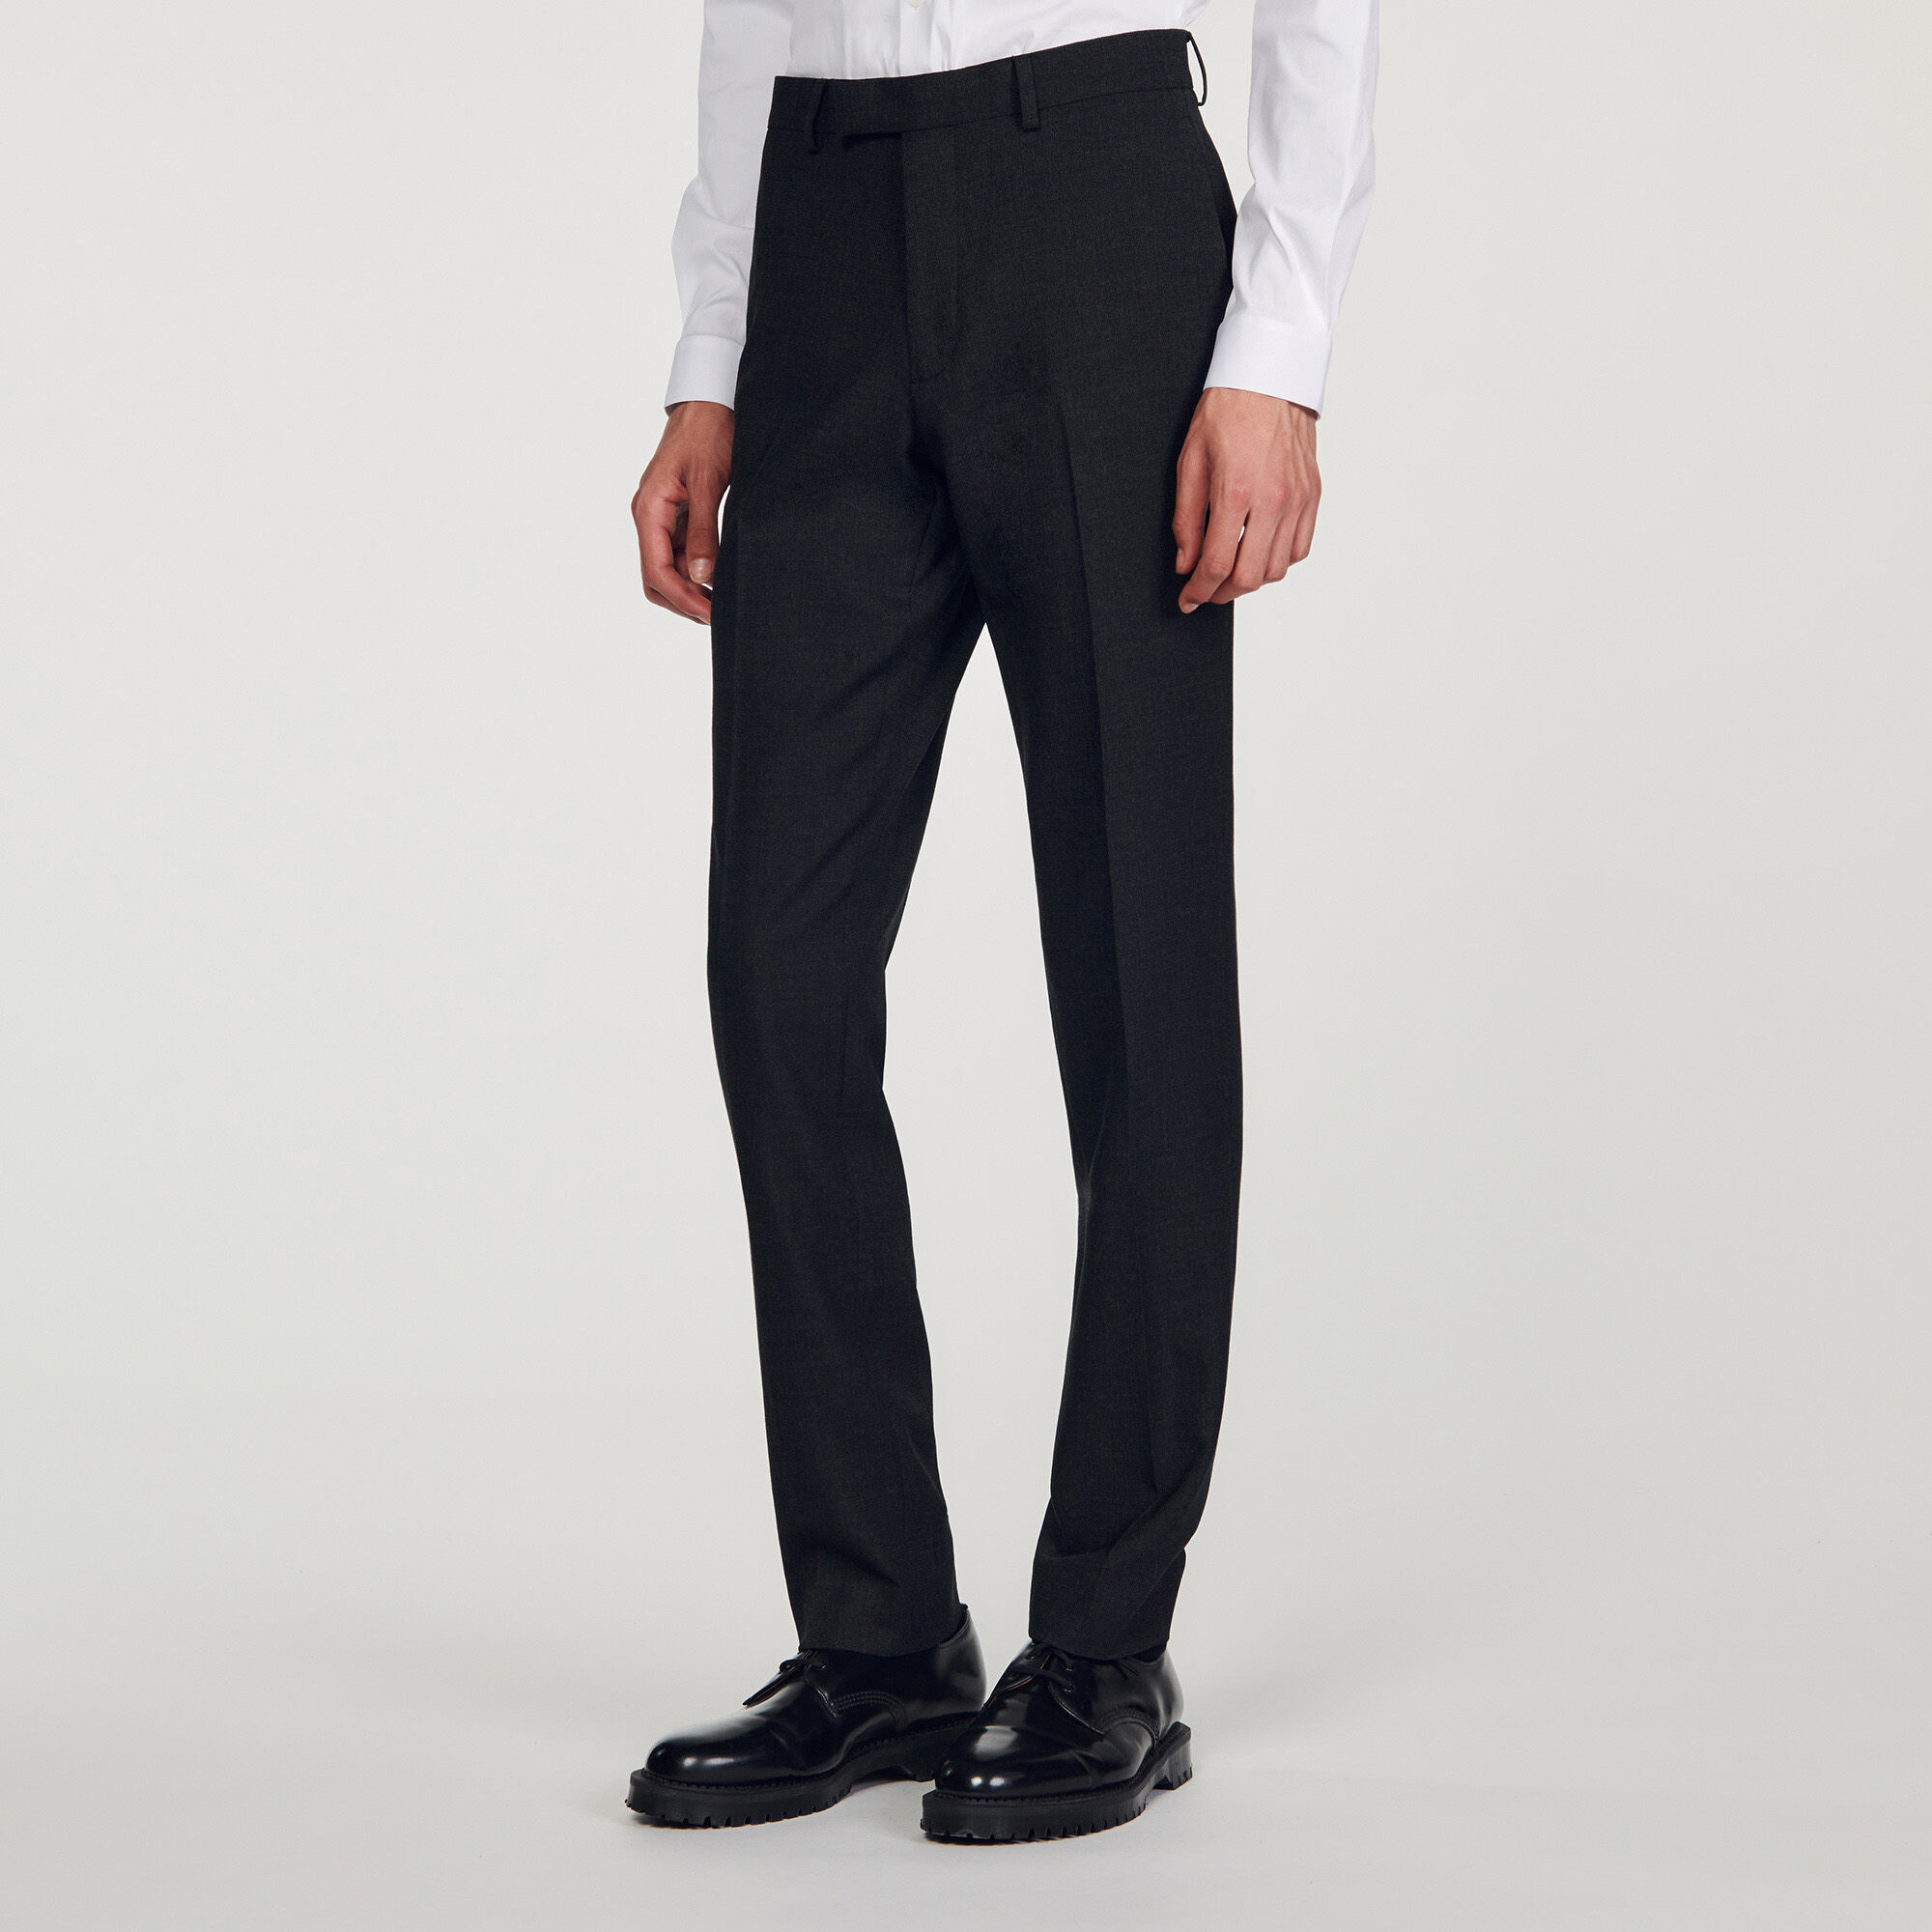 New Look skinny suit trousers in dark grey | ASOS